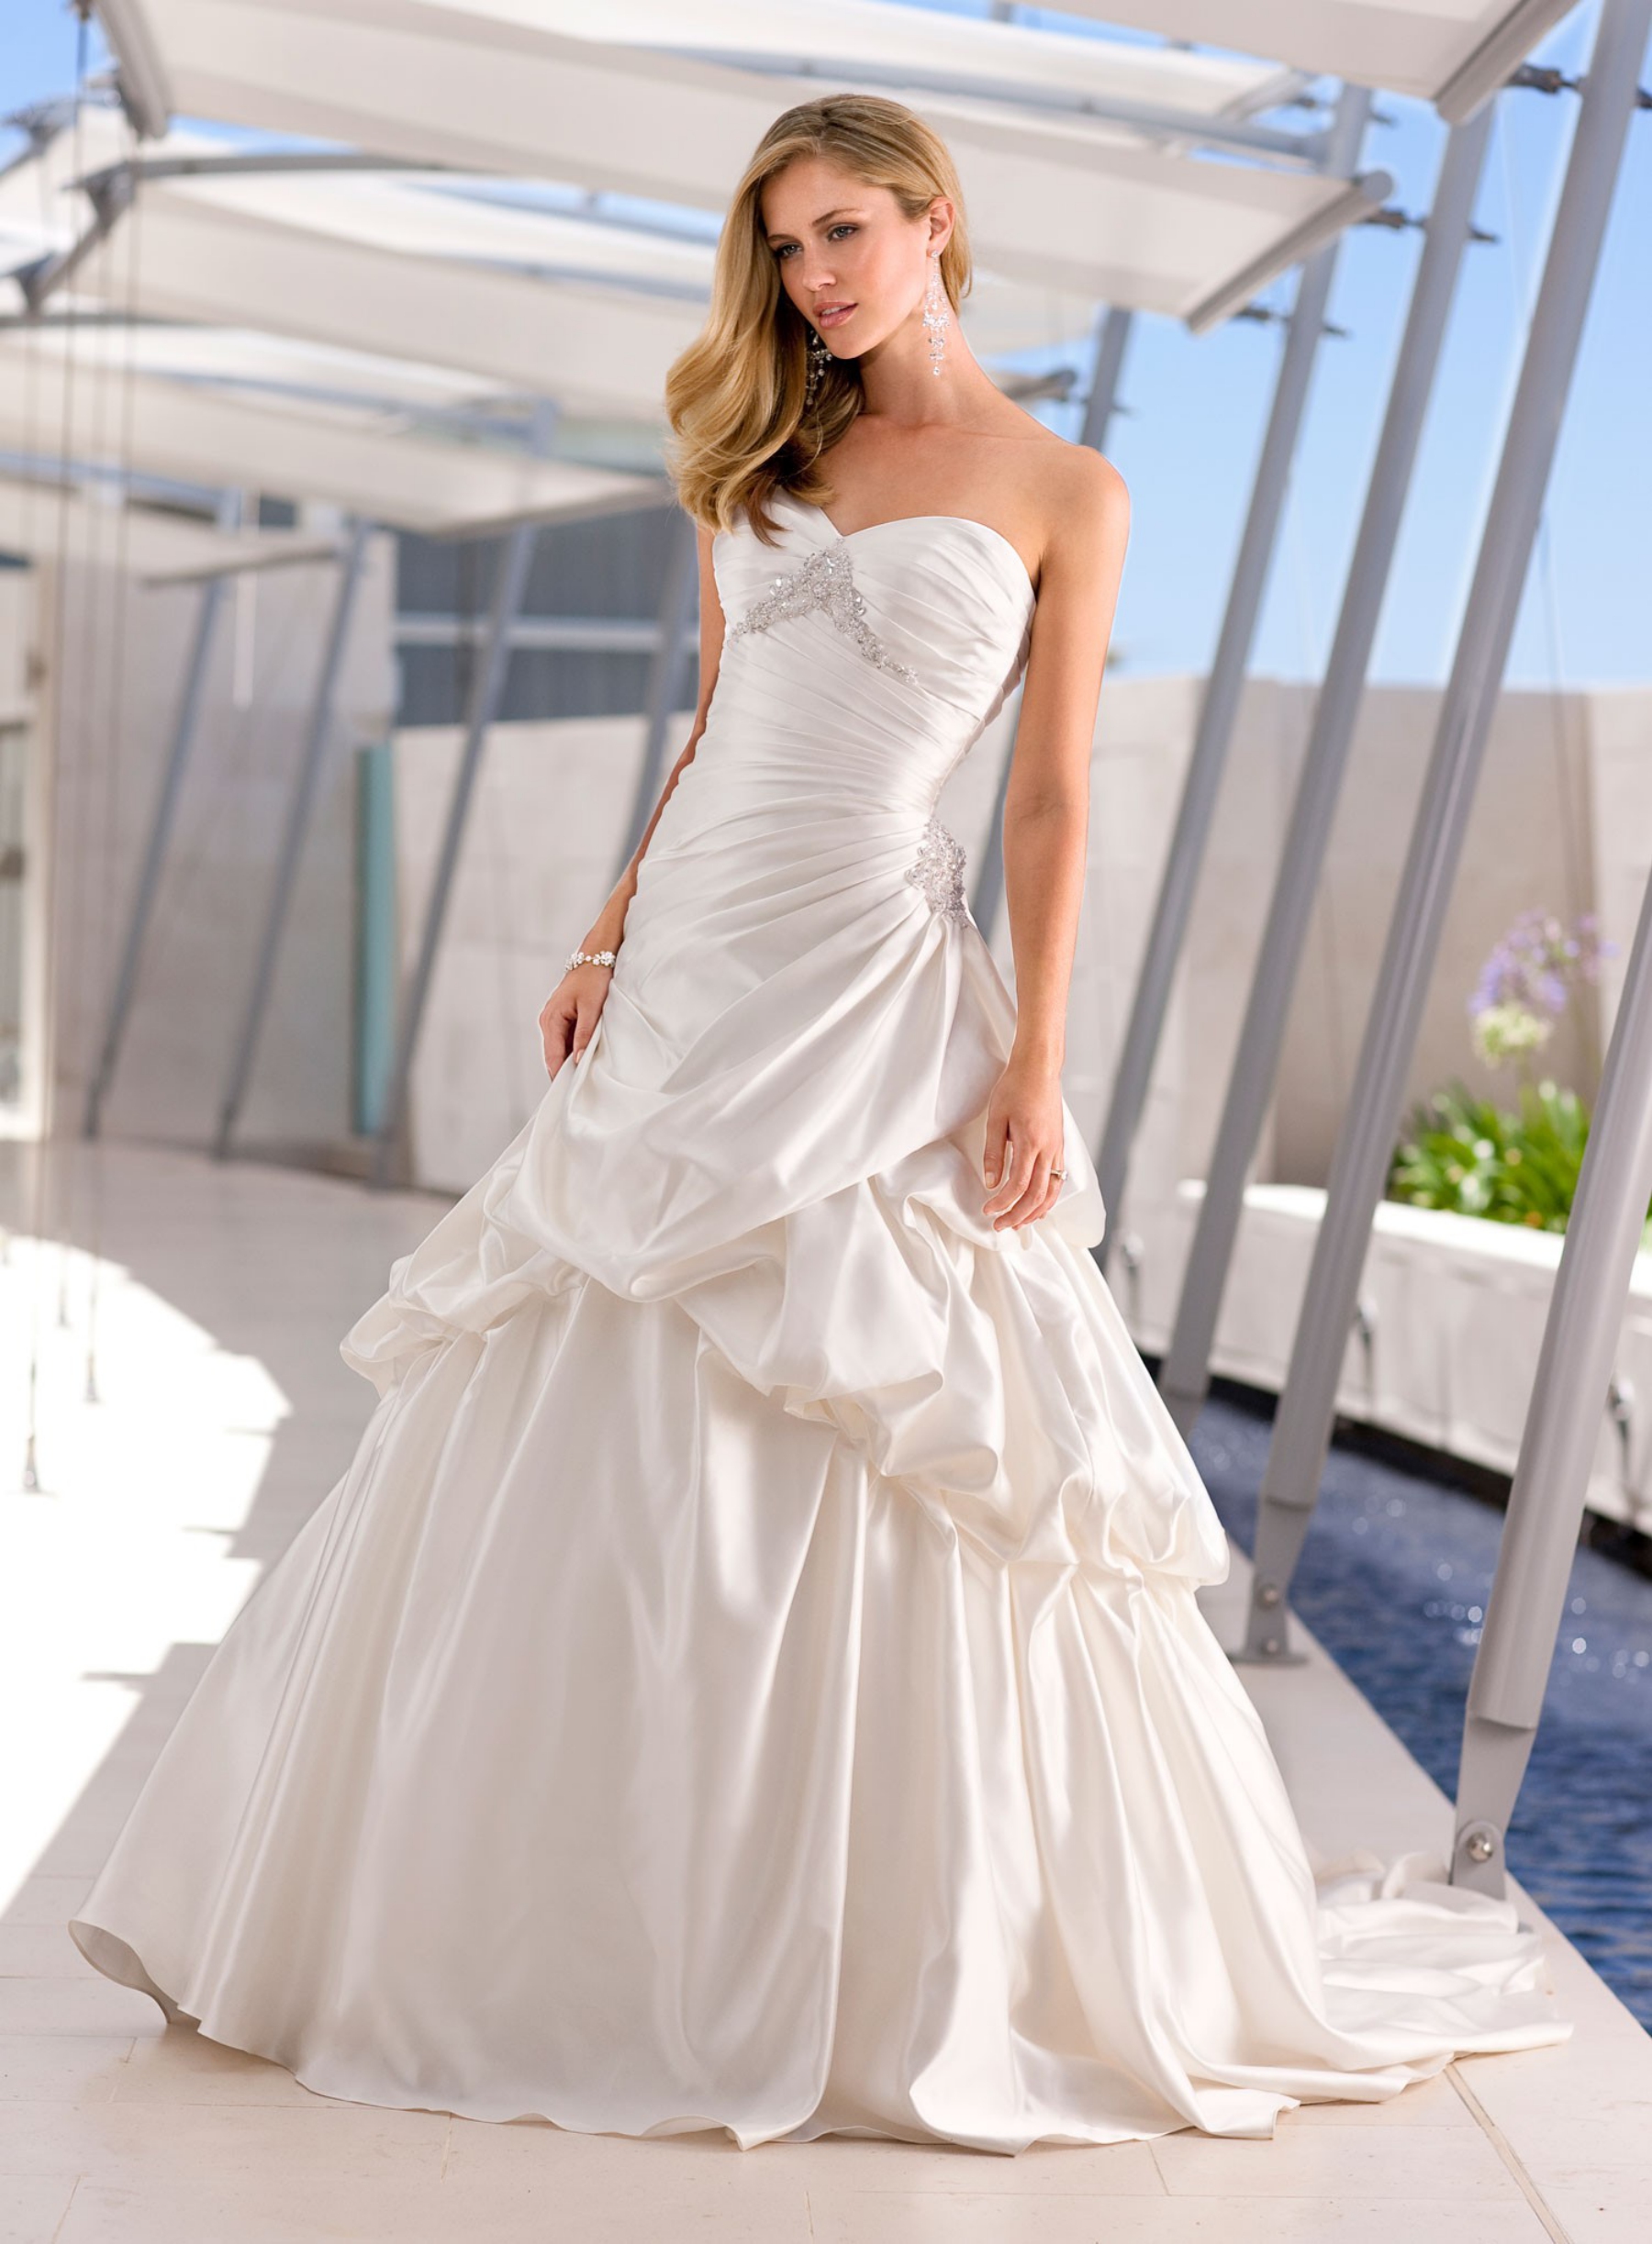 Cheap Wedding Dresses Under 100 Dollars